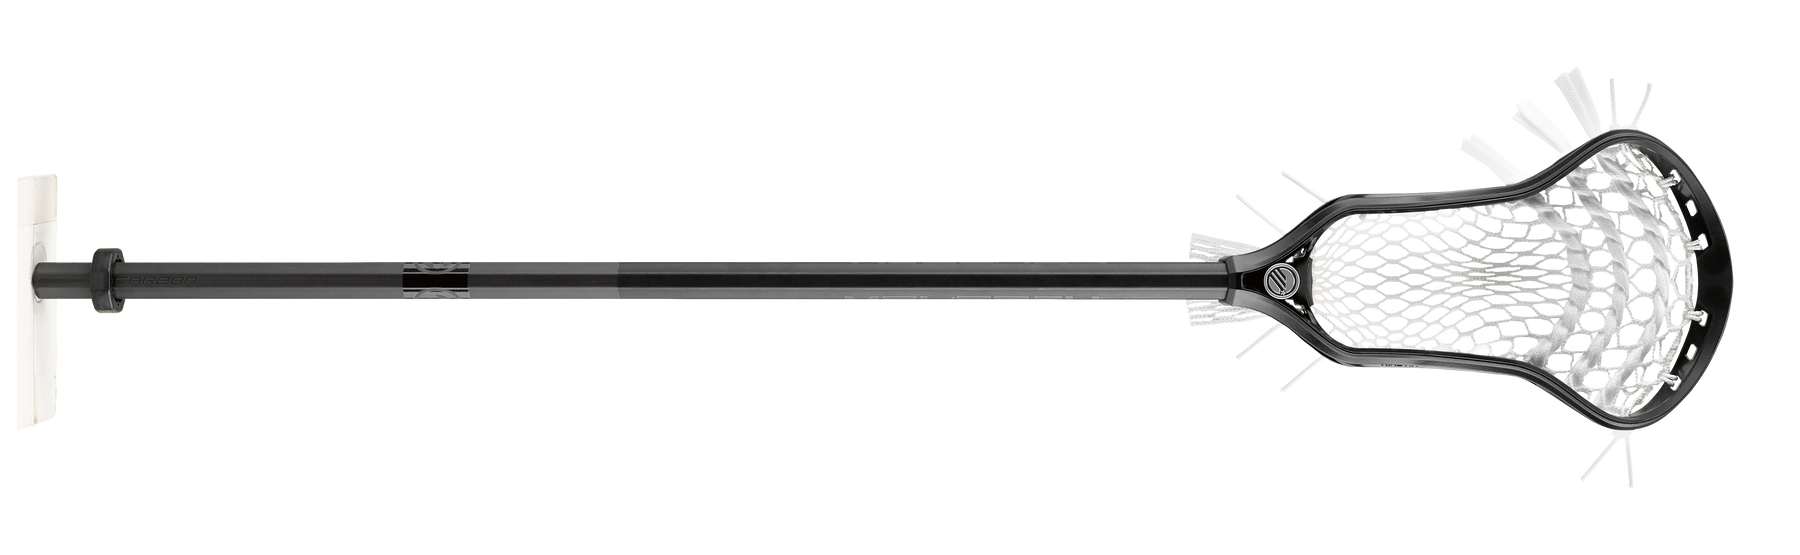 Bâton complet de crosse en carbone Maverik Kinetk